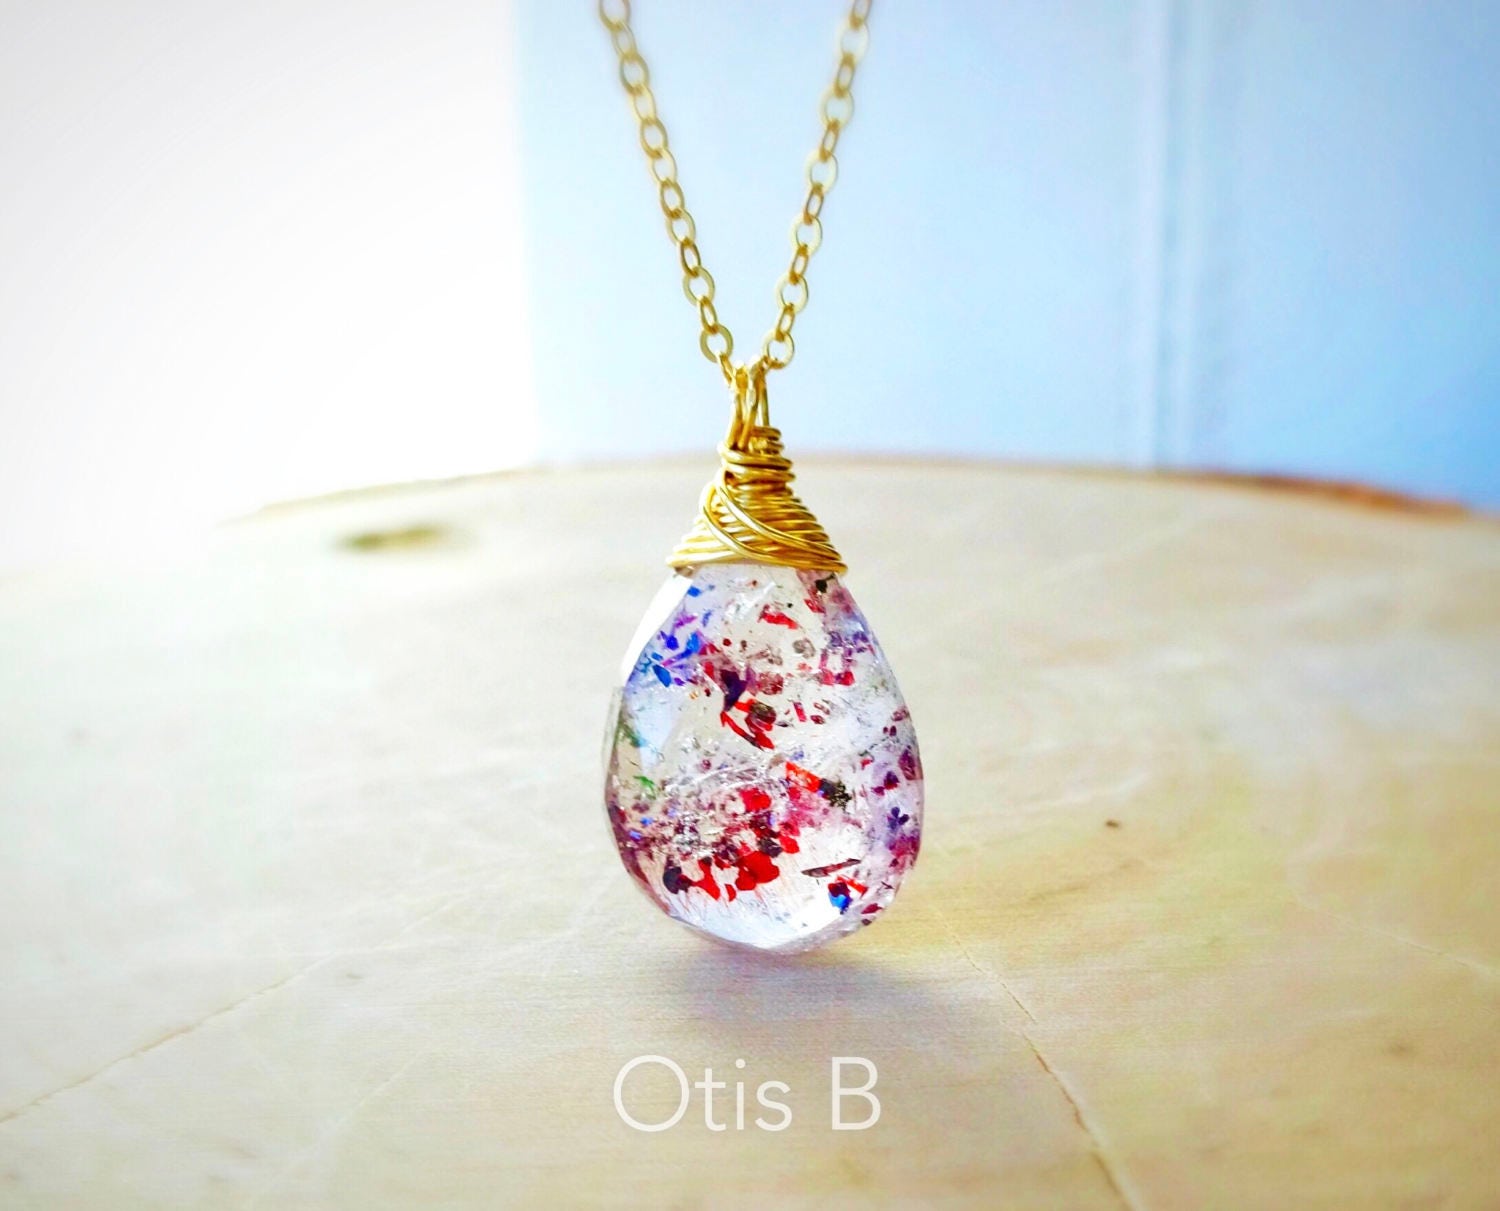 Moss Amethyst necklace, Super Seven gemstone, Otis B, February, spiritual, healing stones, melody stone, crystal pendant, wire wrapped gem